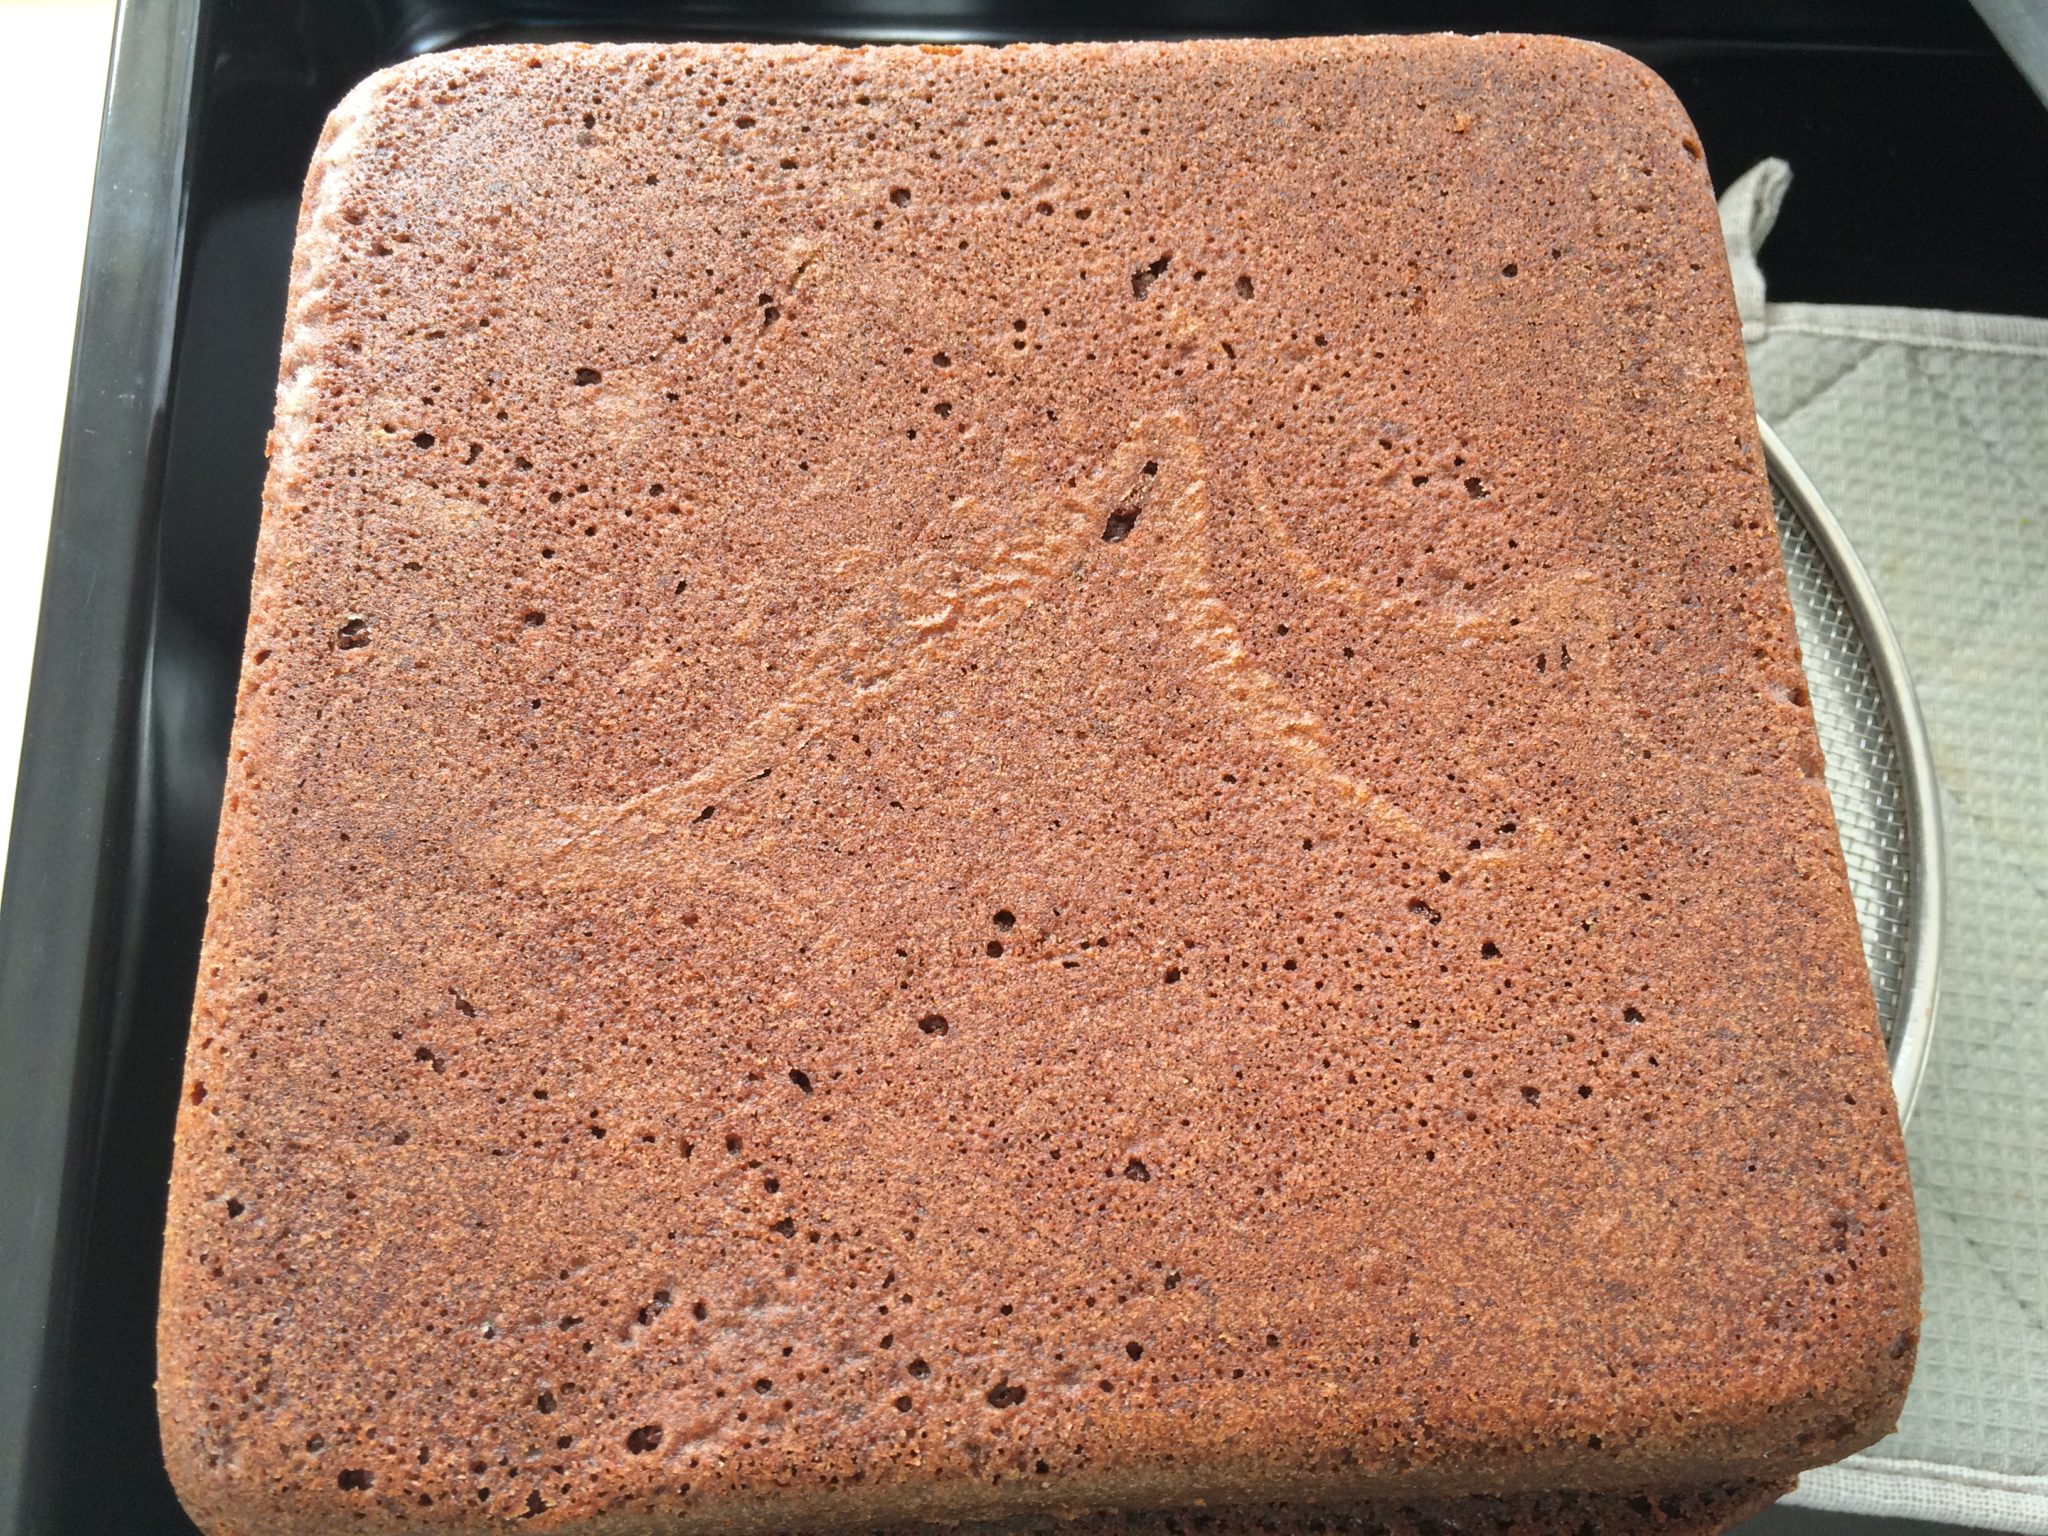 Eggless Chocolate Sponge Cake